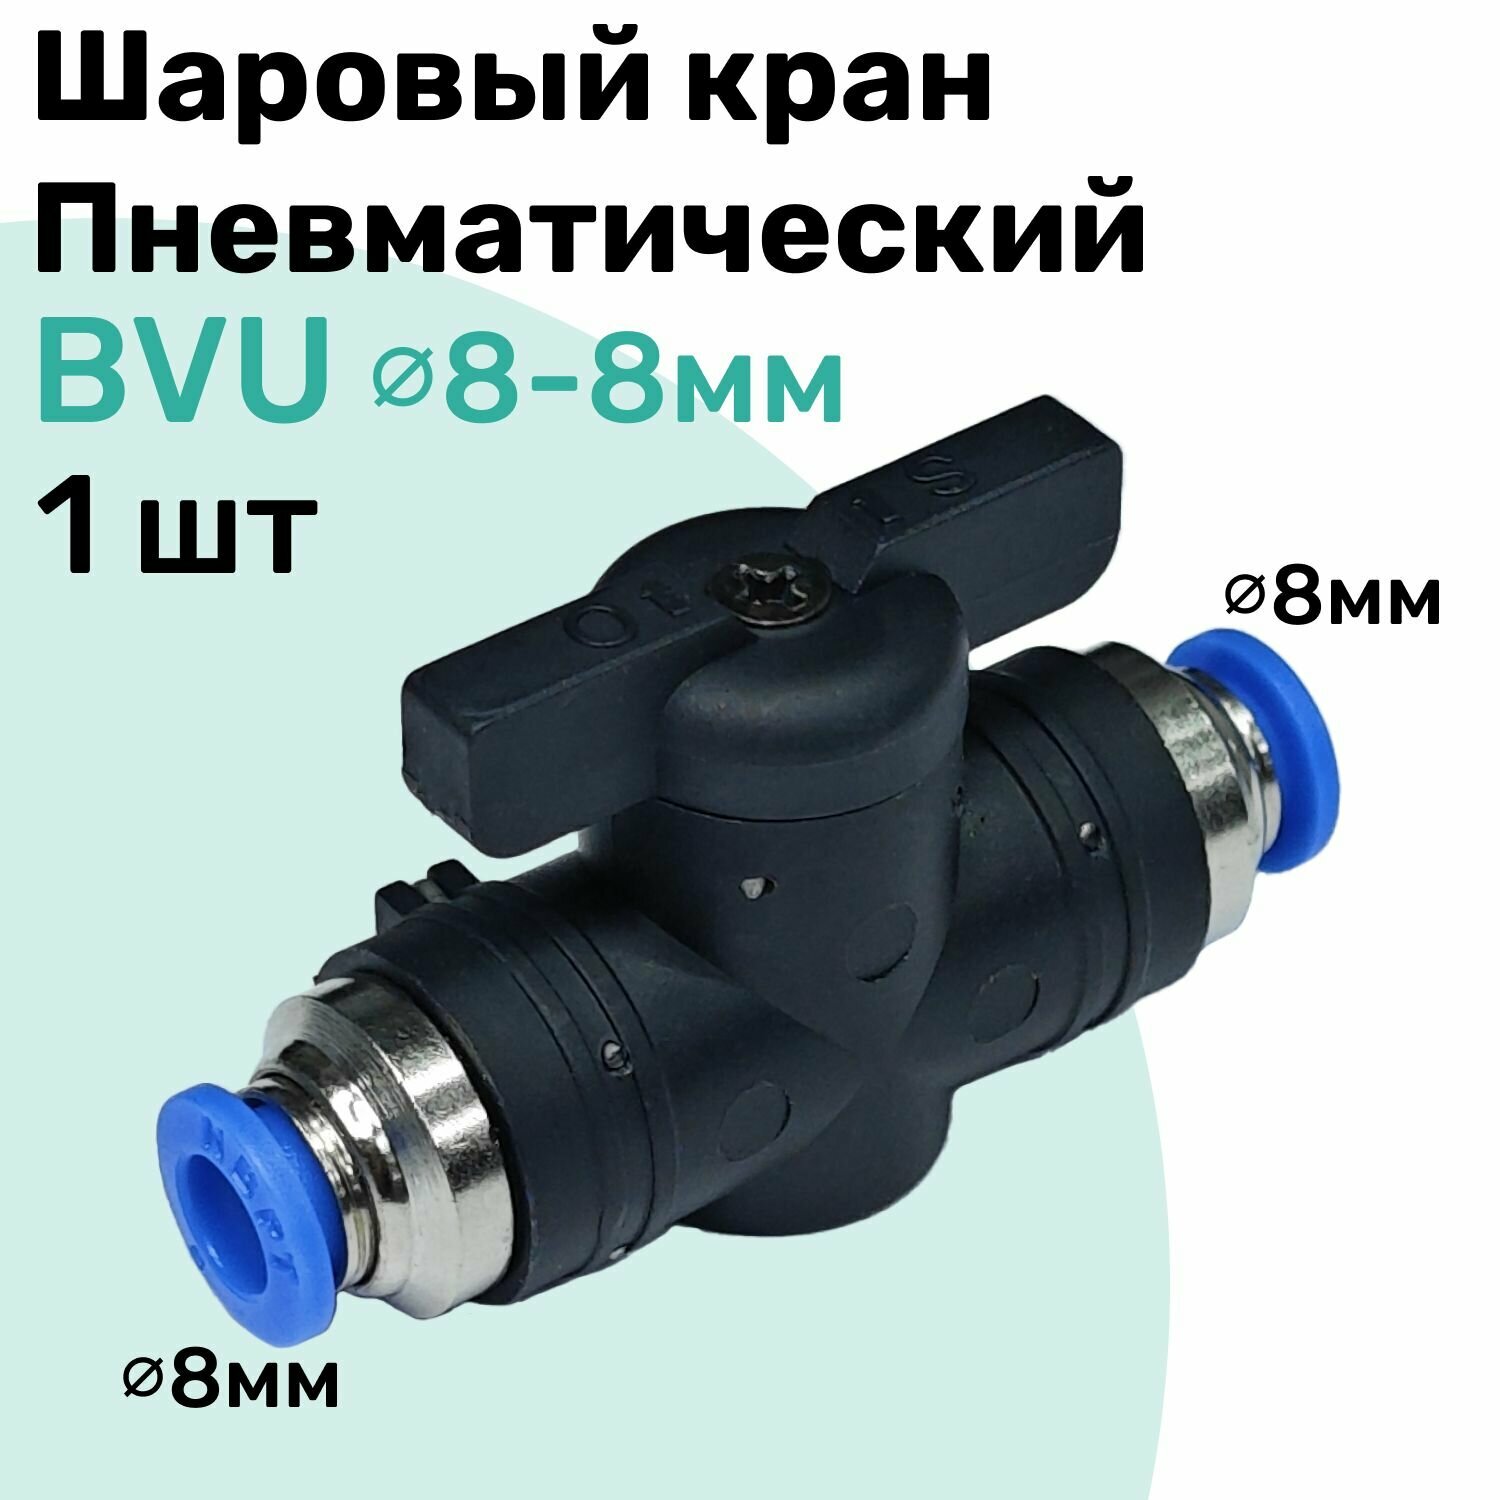 Шаровый кран пневматический BVU 8-8 мм, Пневмофитинг NBPT